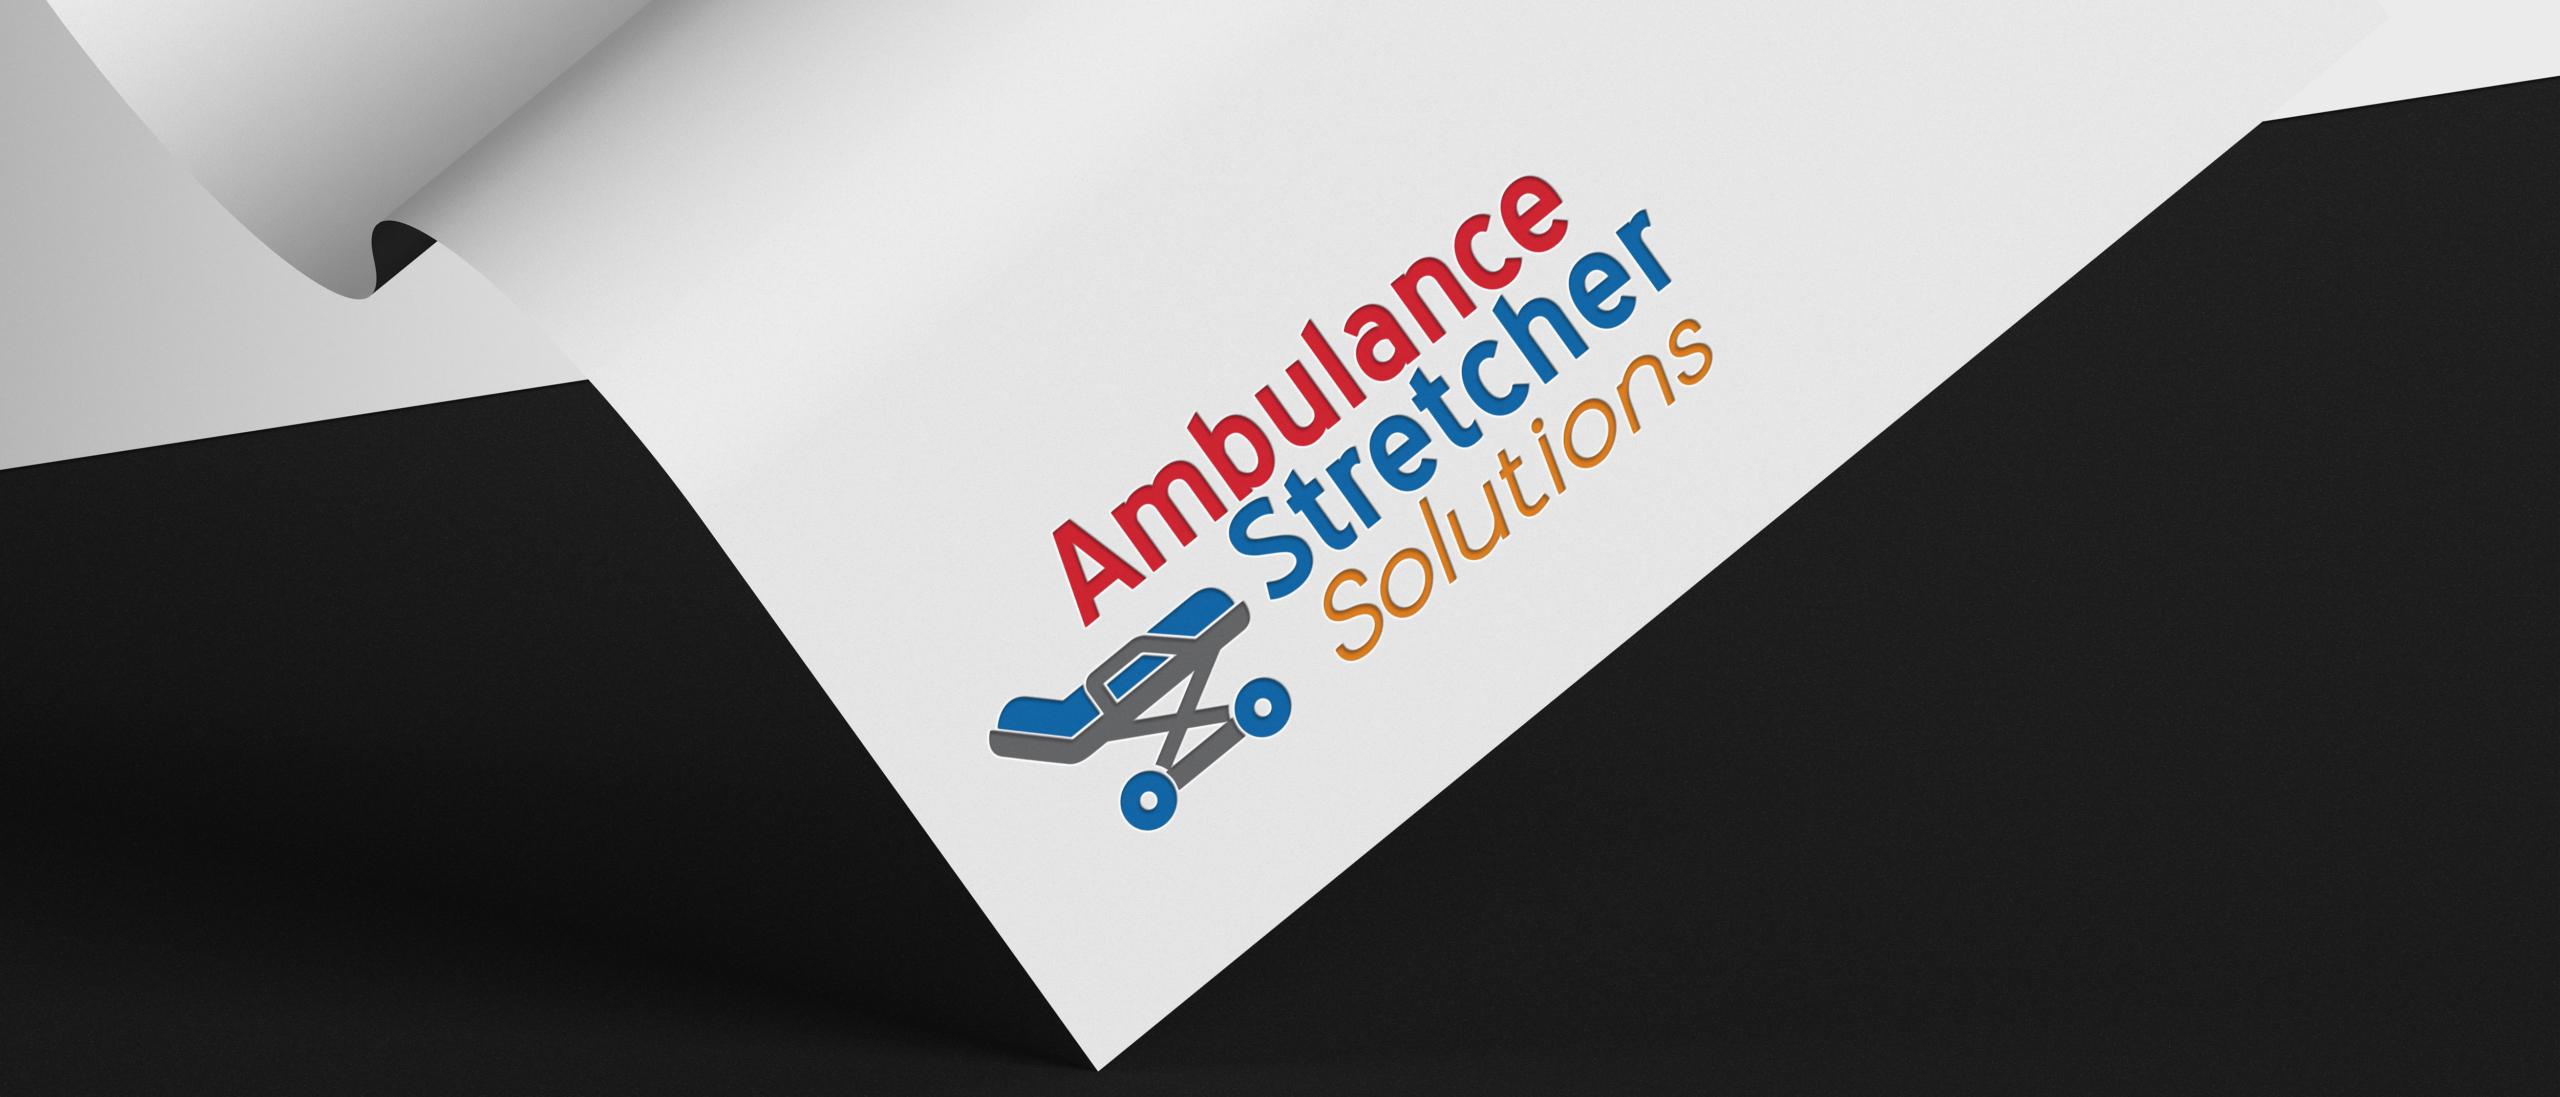 Ambulance Stretcher Solutions